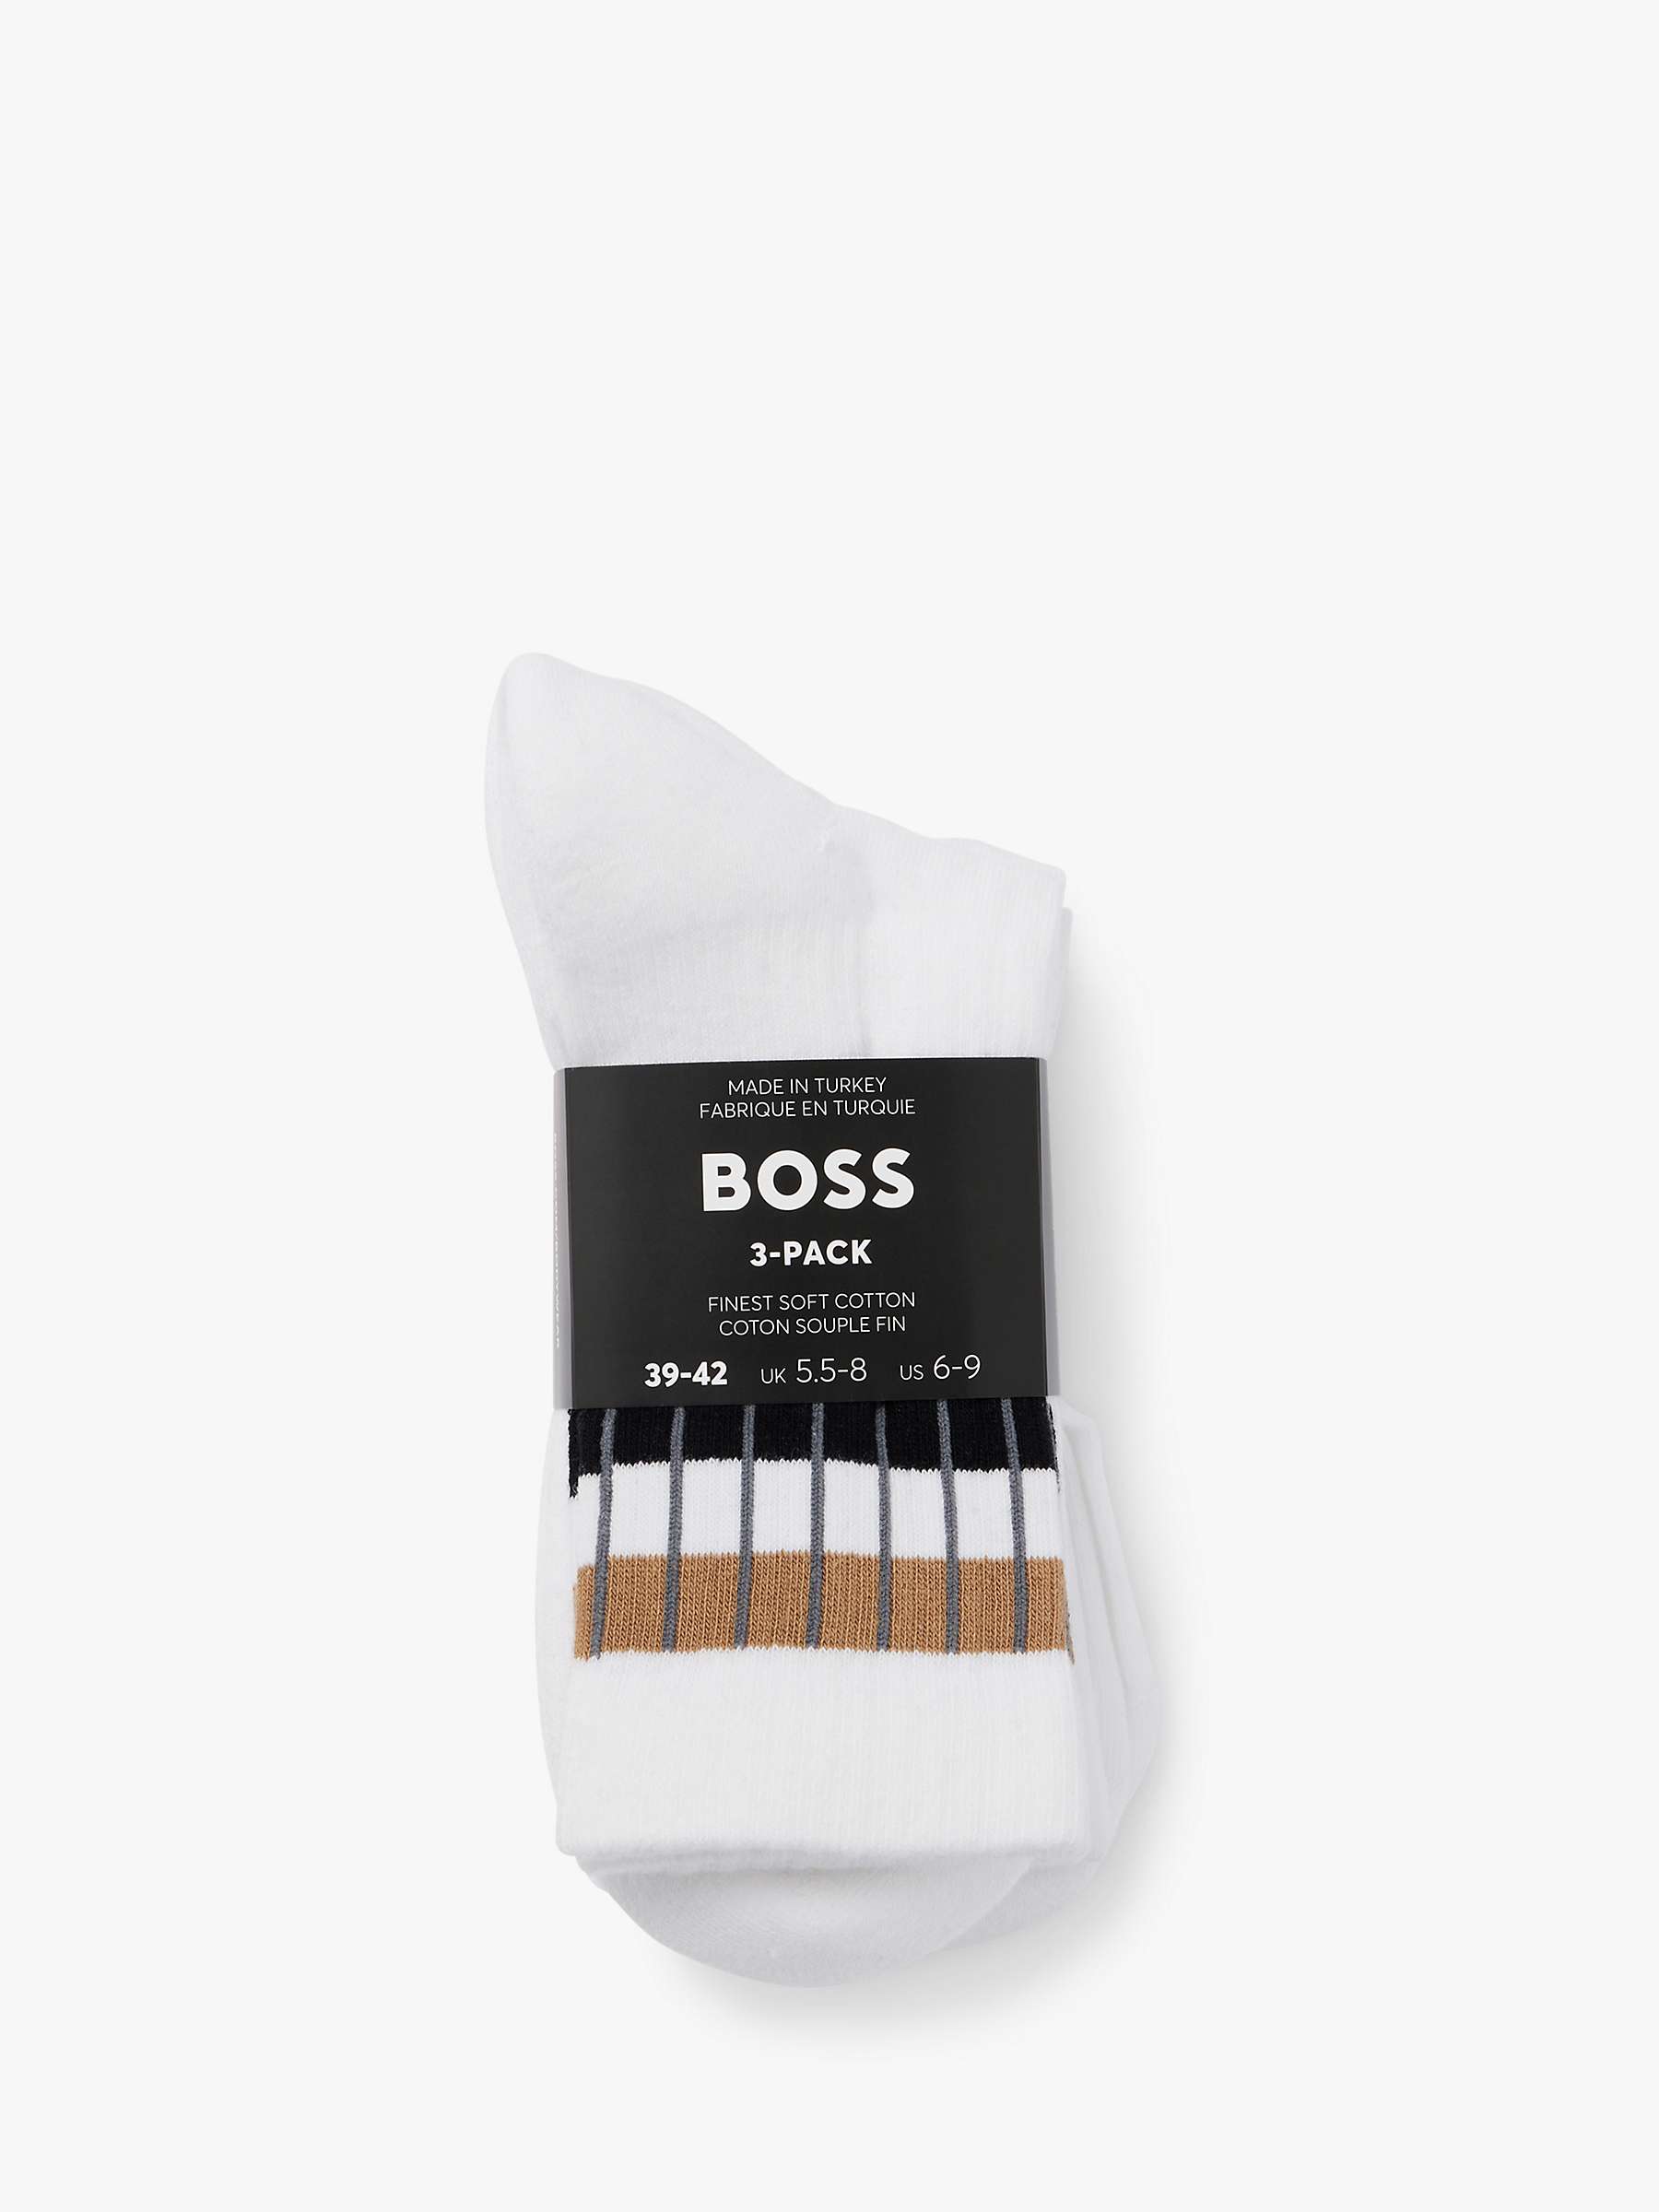 Buy BOSS Sportive Stripe Socks, Pack of 3 Online at johnlewis.com